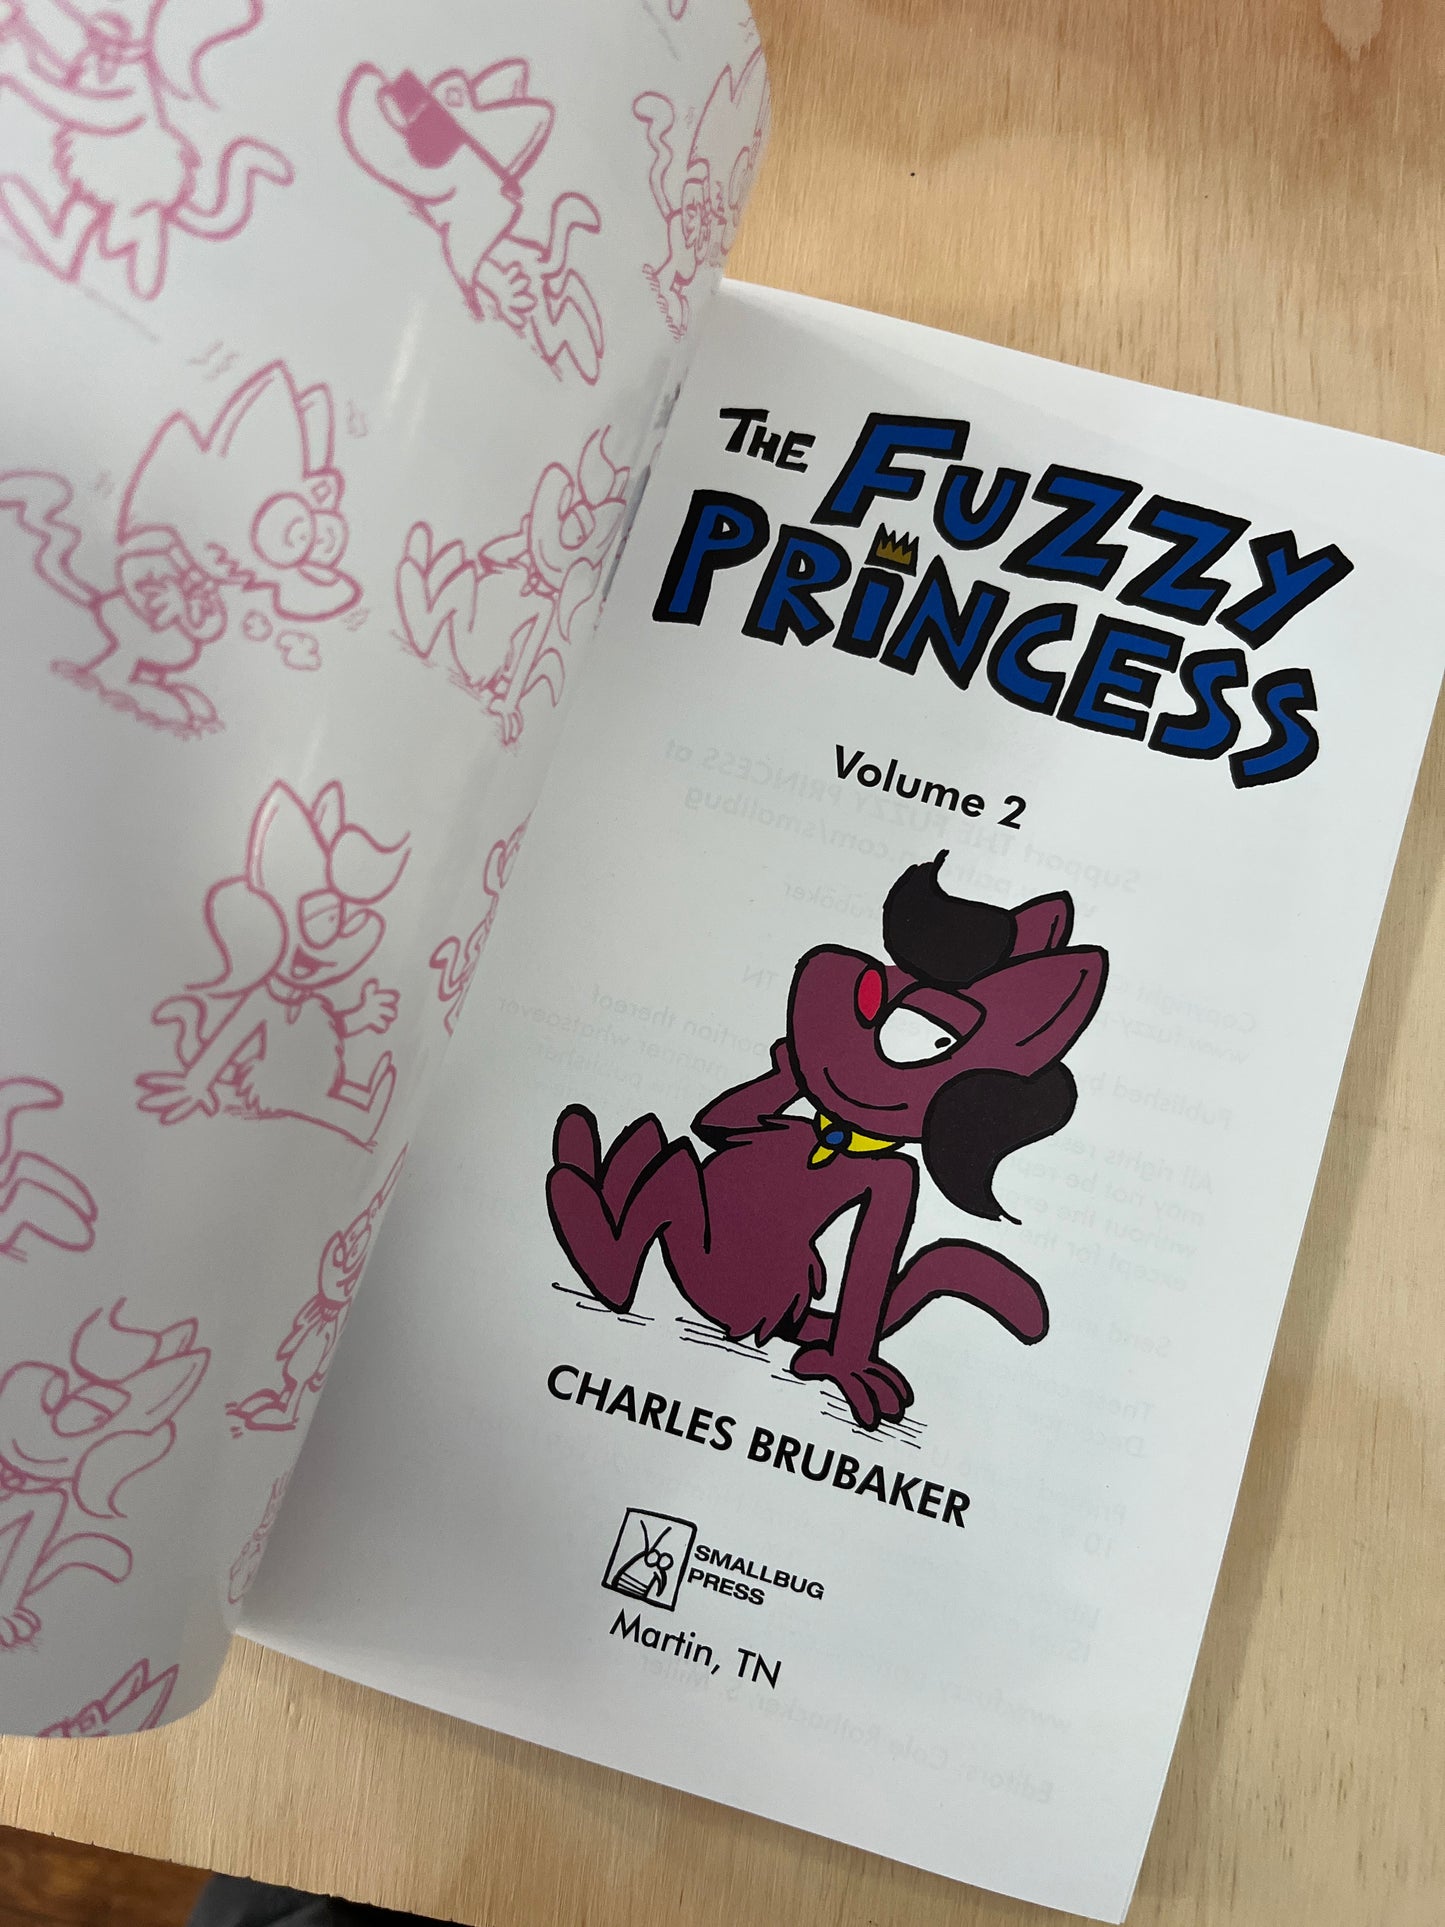 The Fuzzy Princess Volume 2